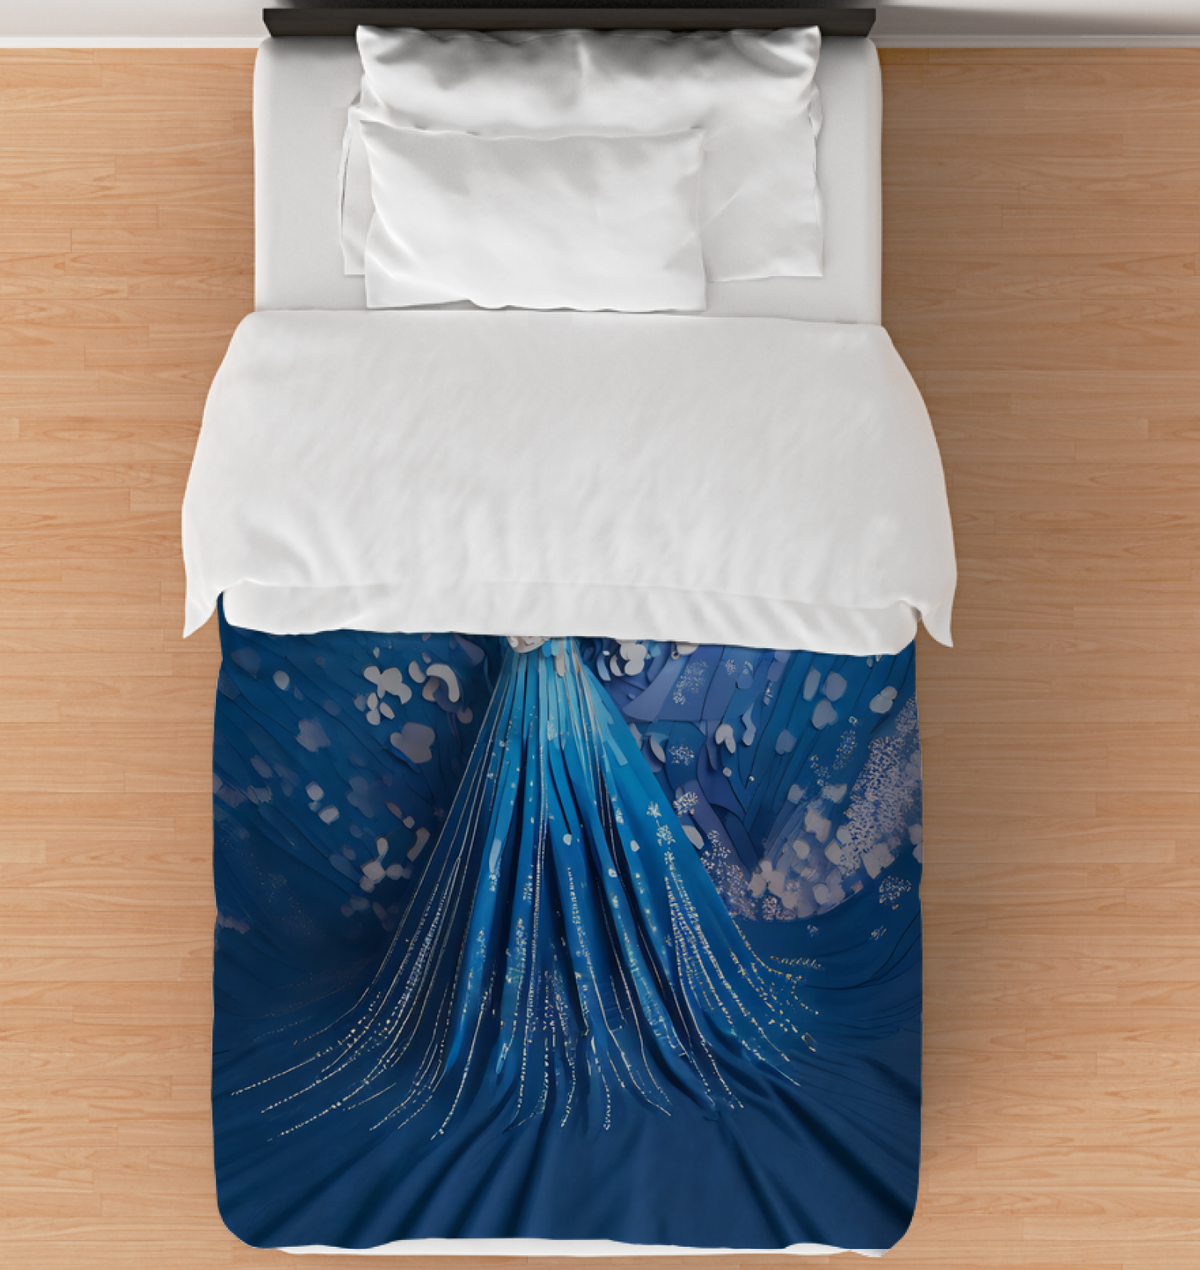 Wild Safari Adventure Comforter with vibrant safari design.